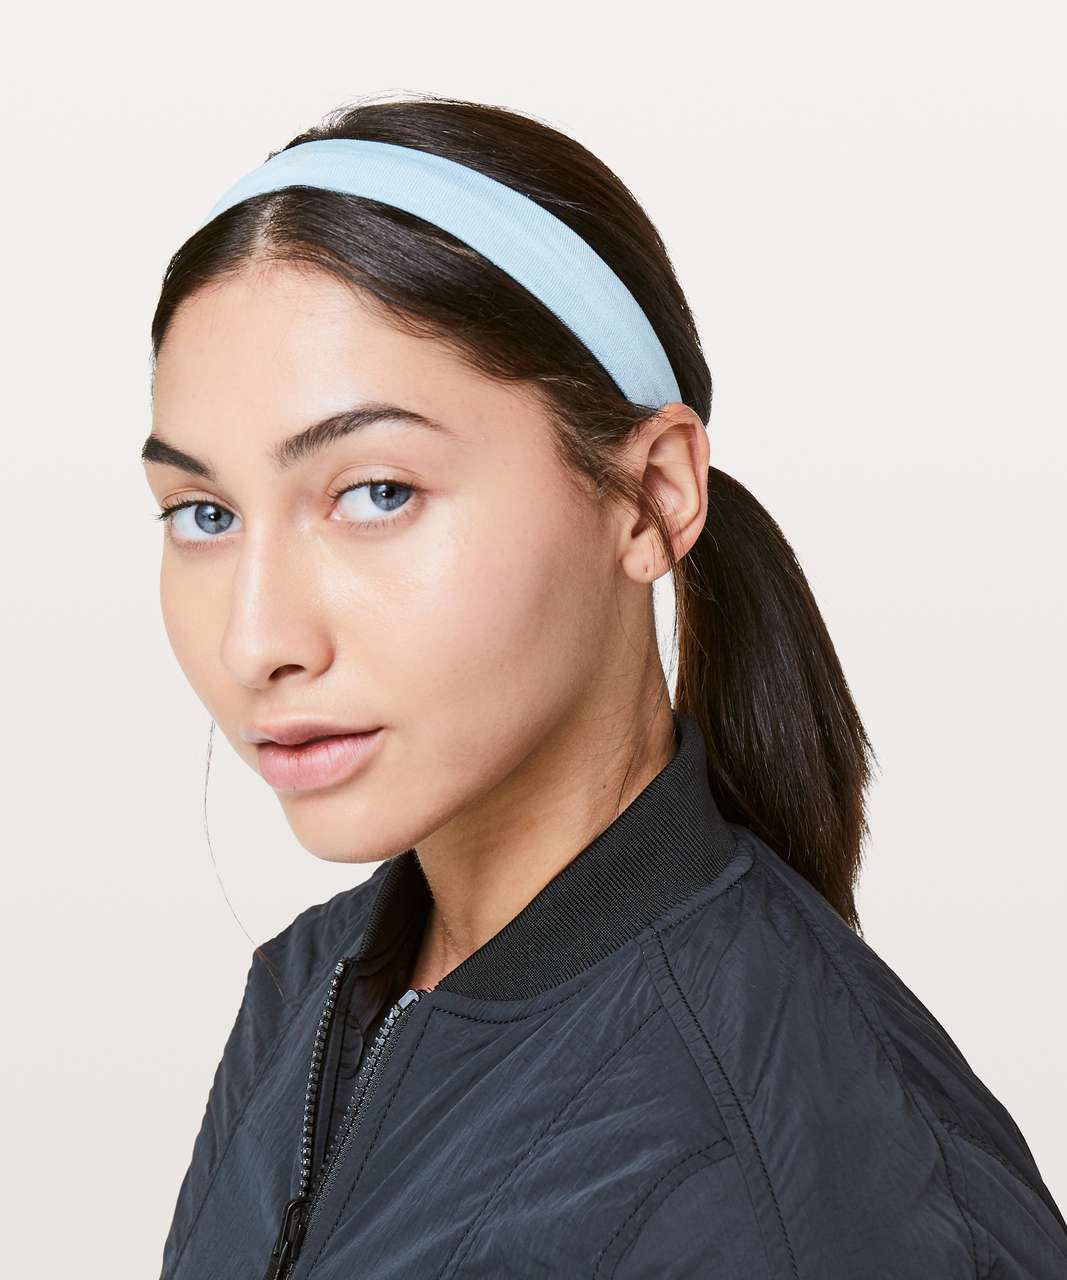 Lululemon Cardio Cross Trainer Headband - Cascade Blue / White